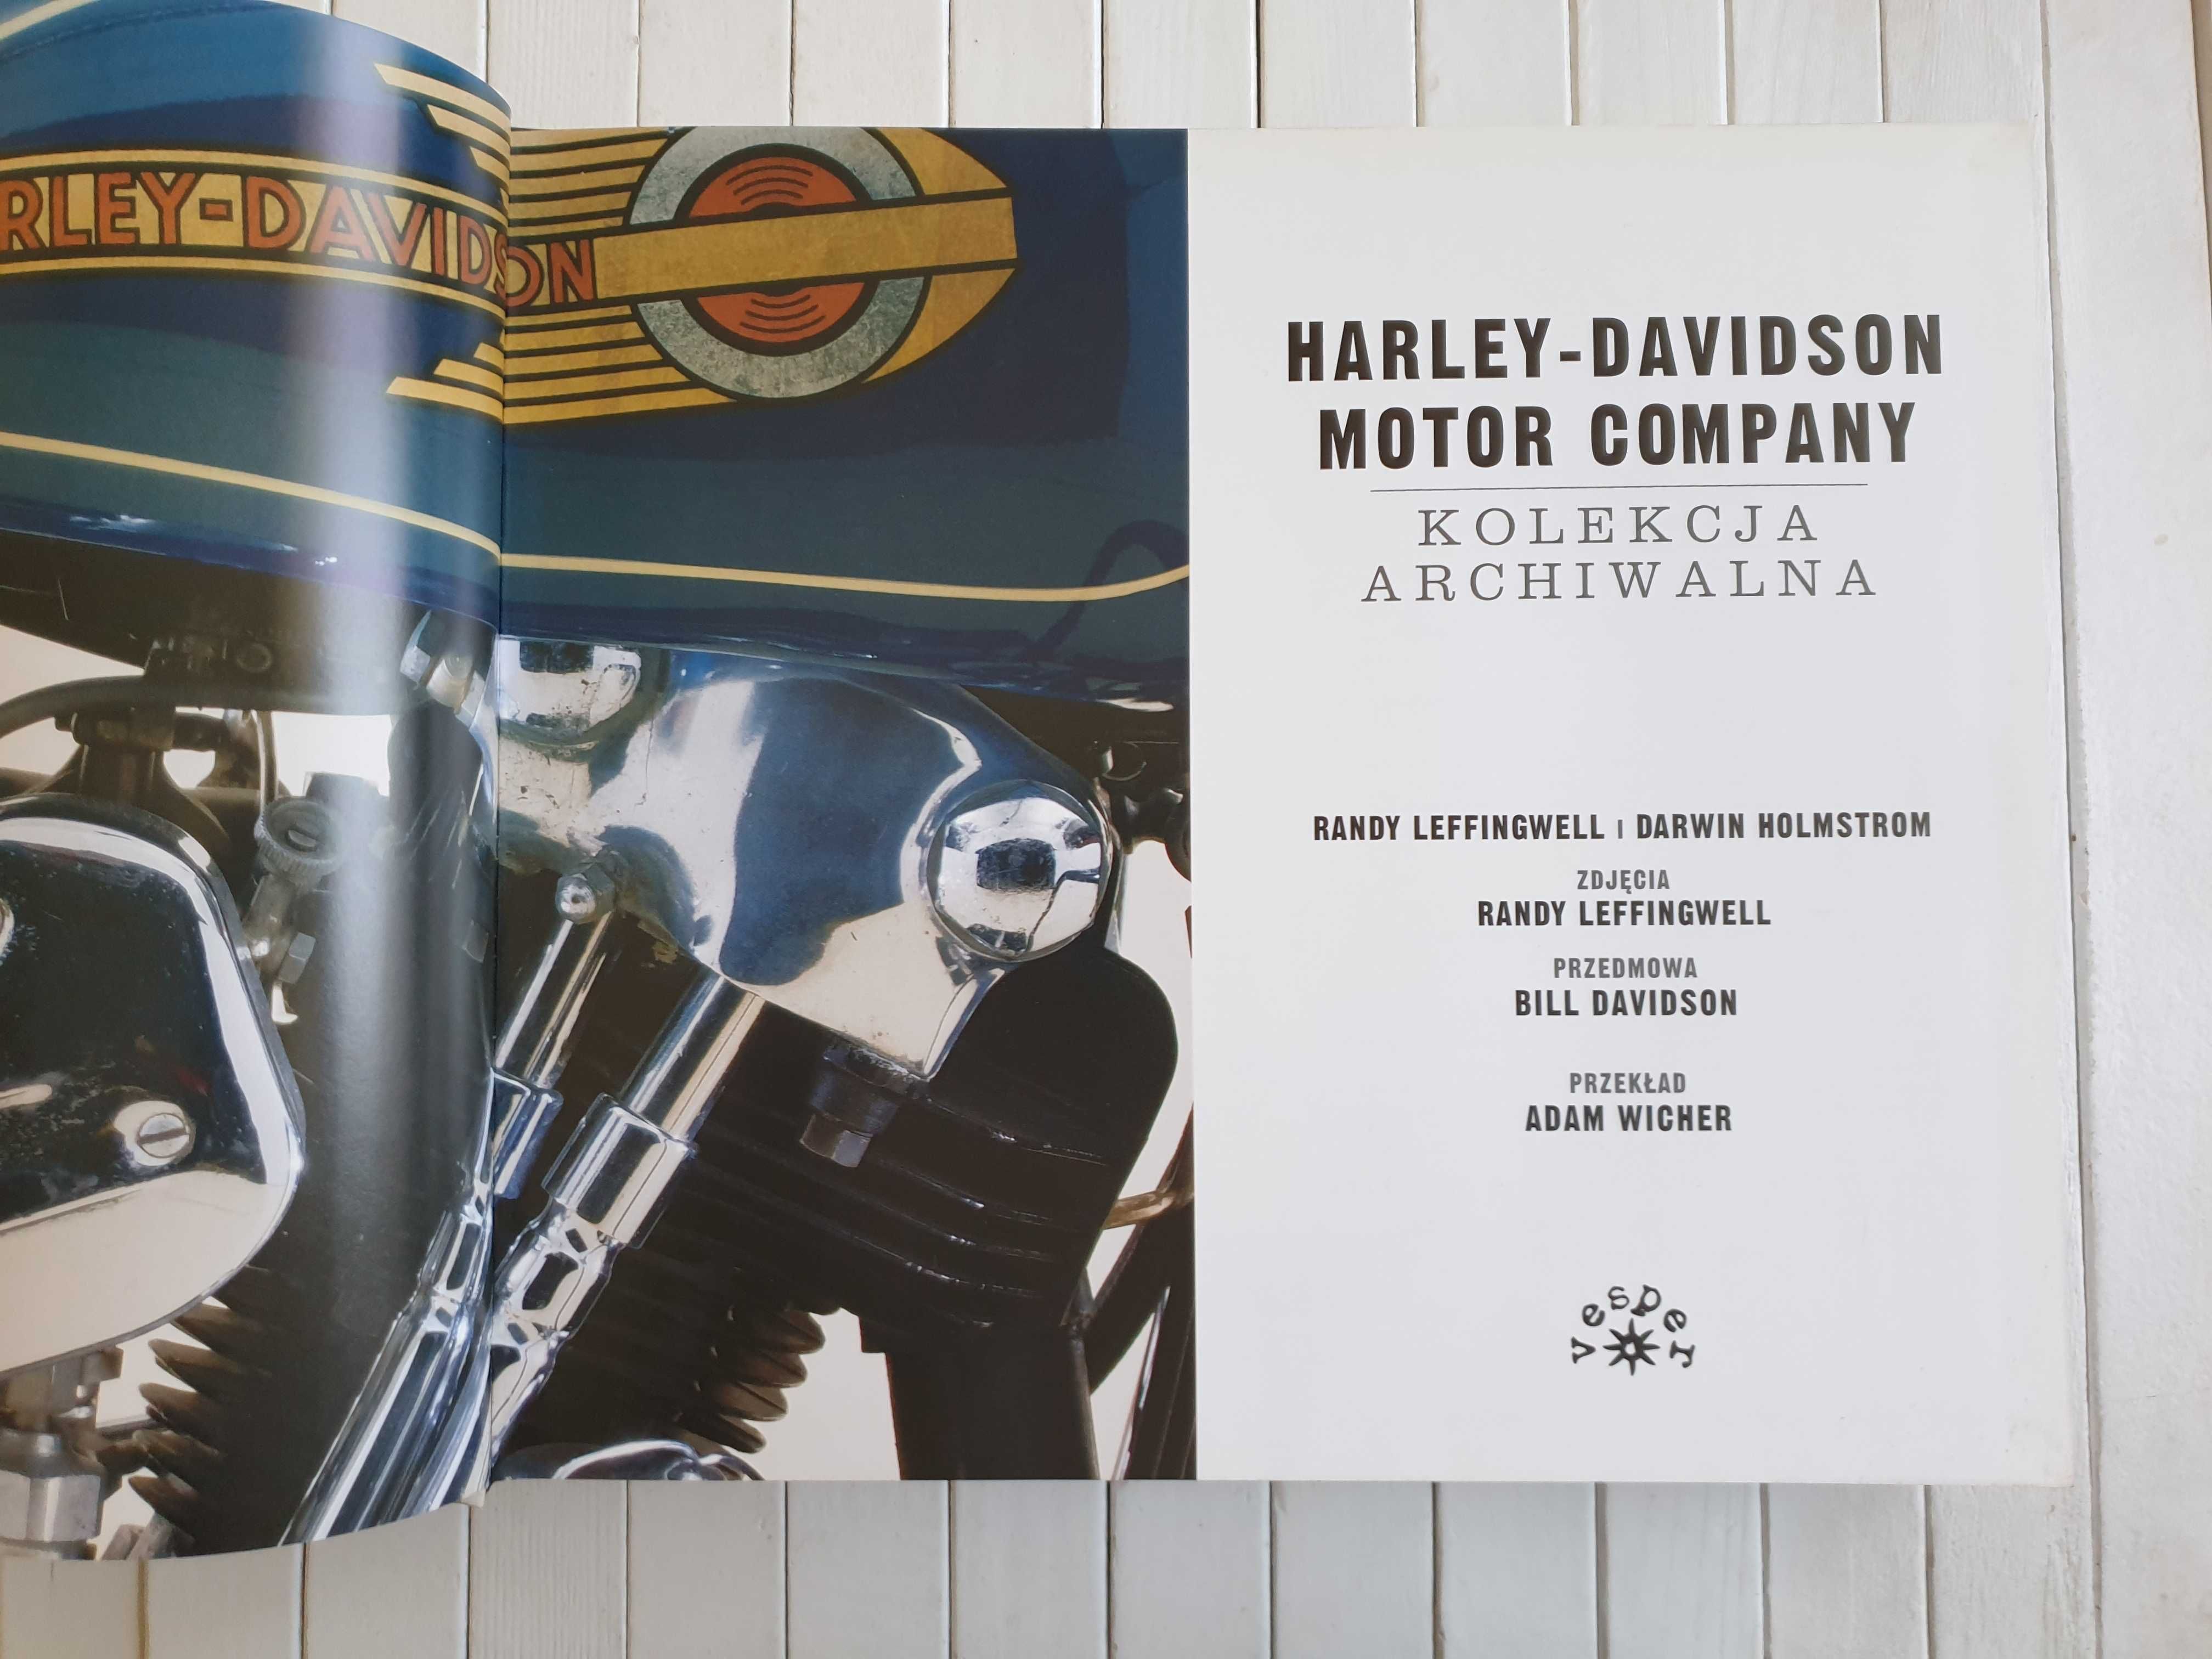 Harley Davidson motor Company kolekcja archiwalna